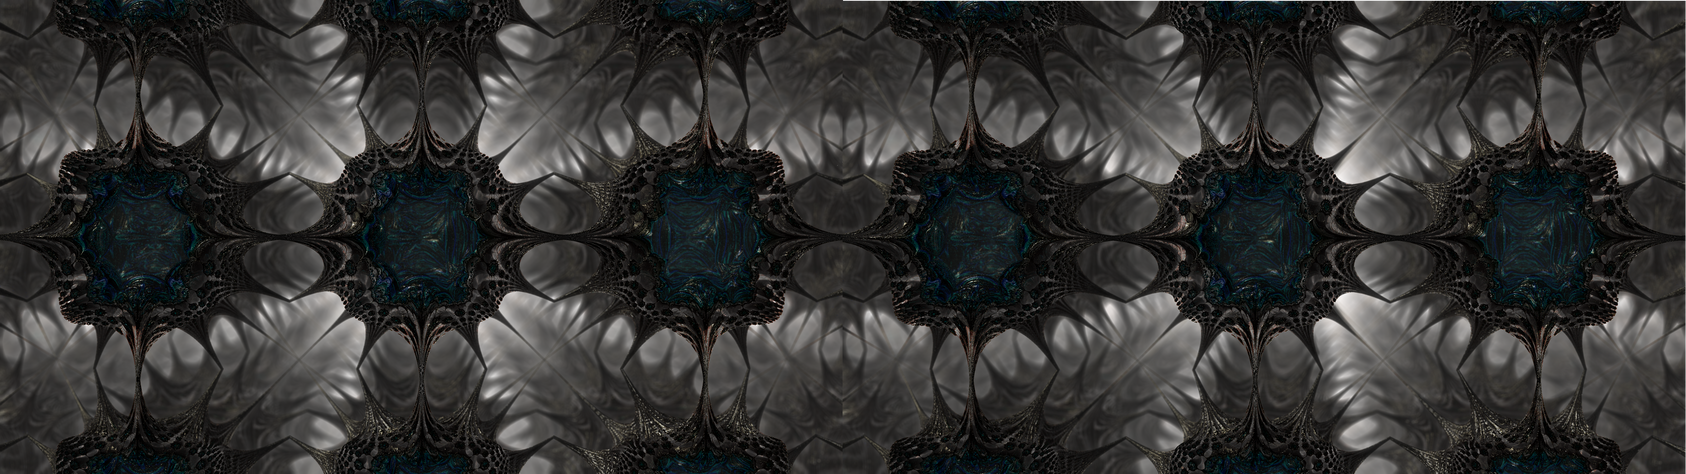 stereoscopic fractal